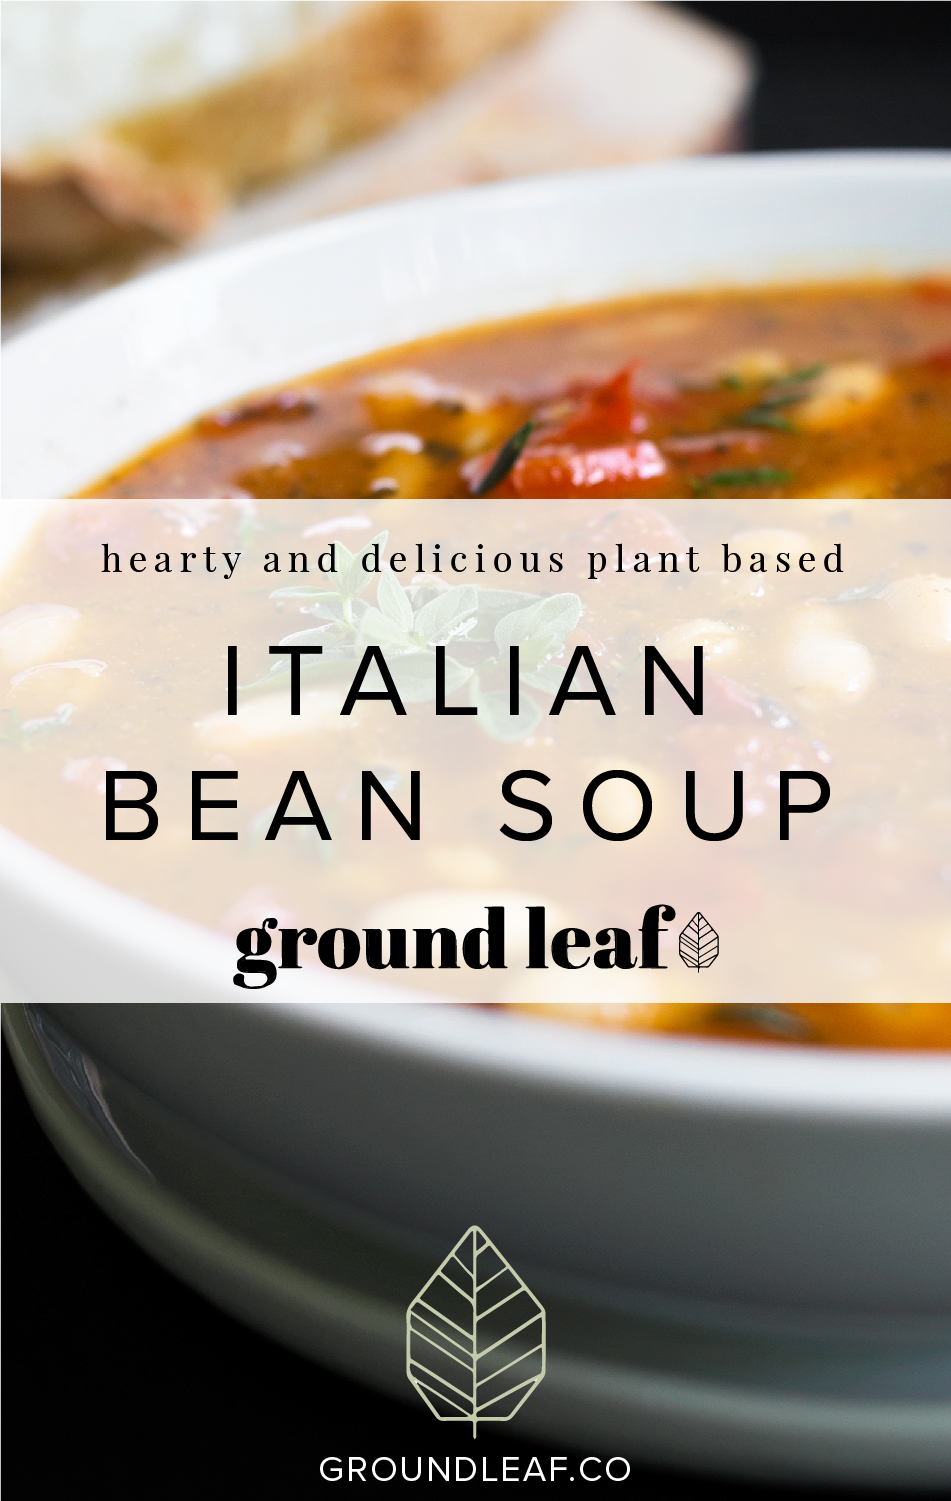 Vegan Italian bean soup recipe by Groundleaf